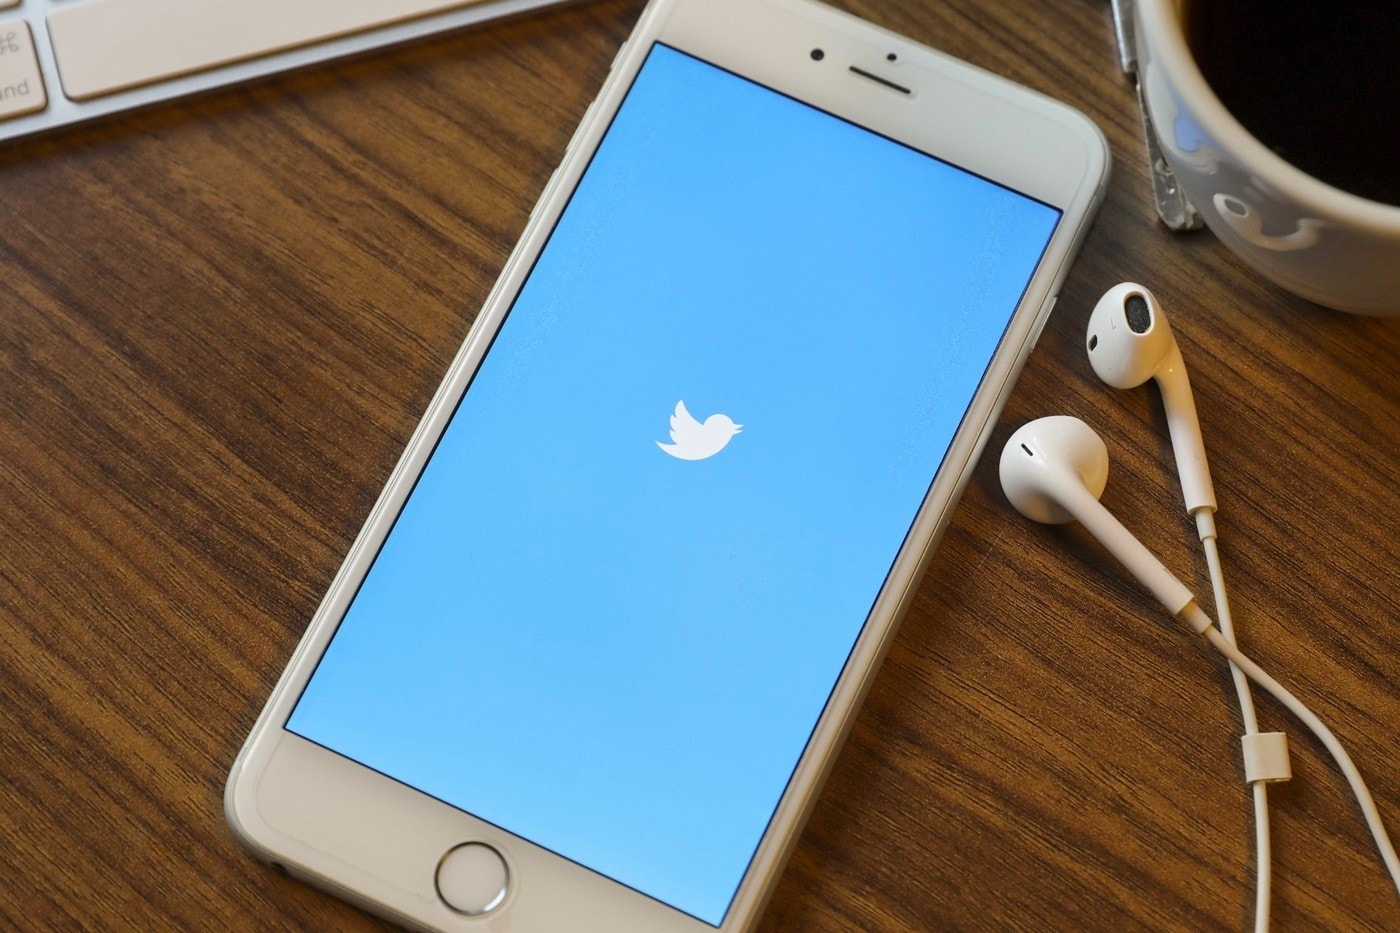 Twitter Bans Links to Hate Speech & Violence External Loophole Prevention Dangerous Materials